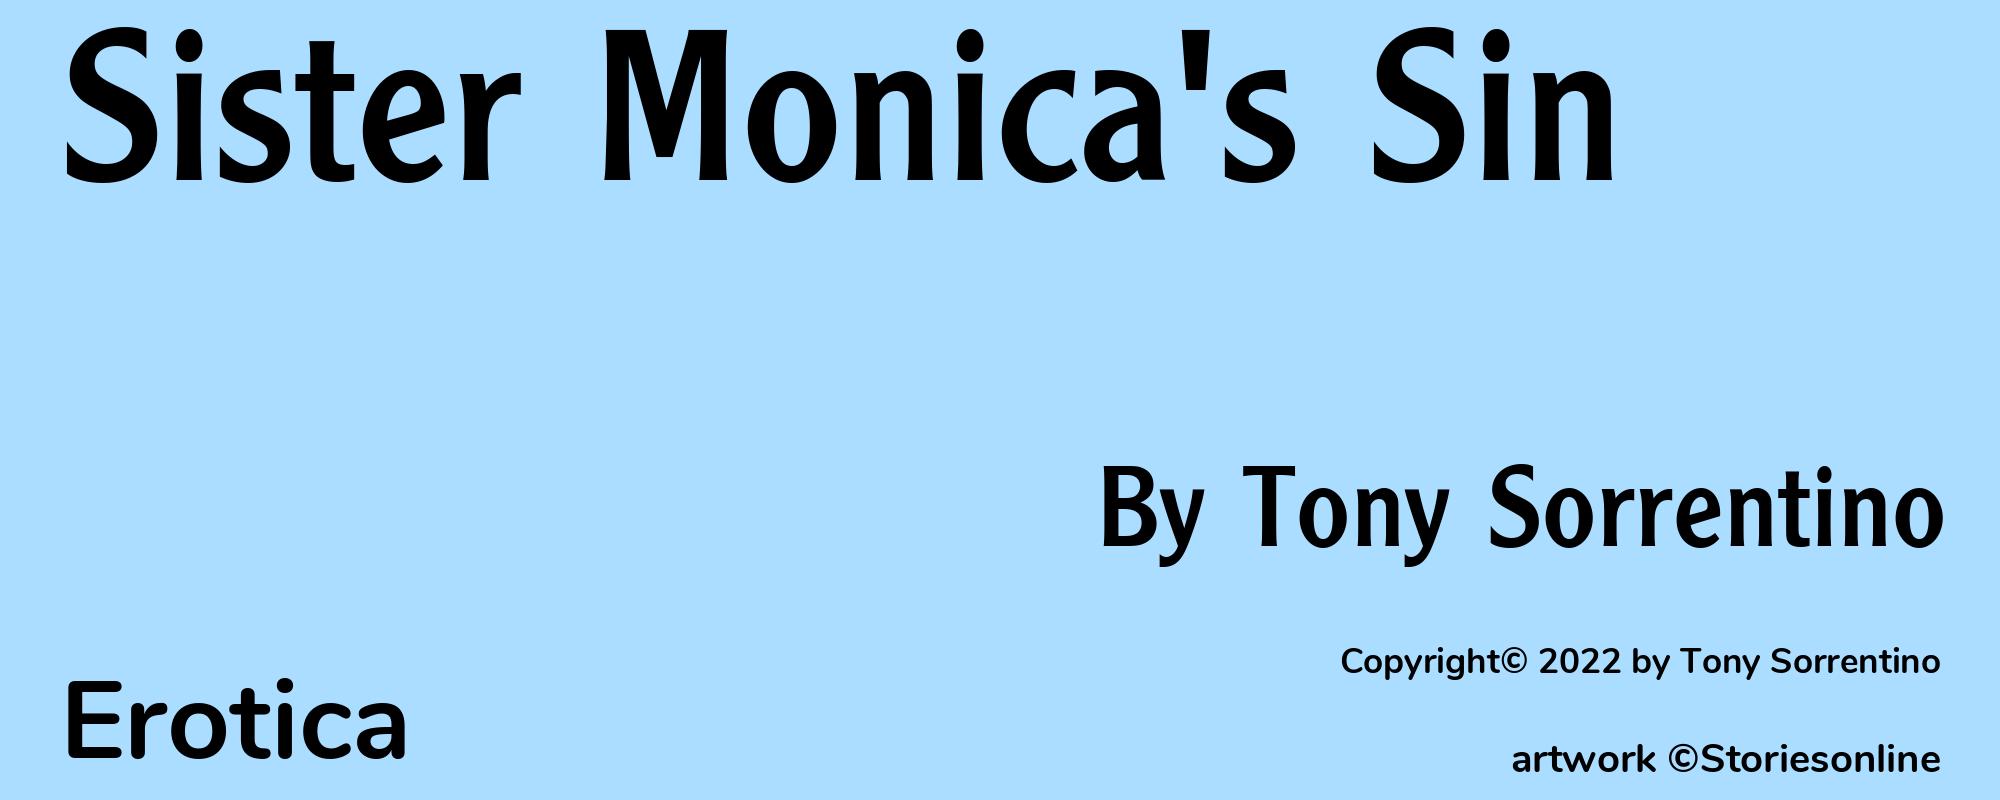 Sister Monica's Sin - Cover